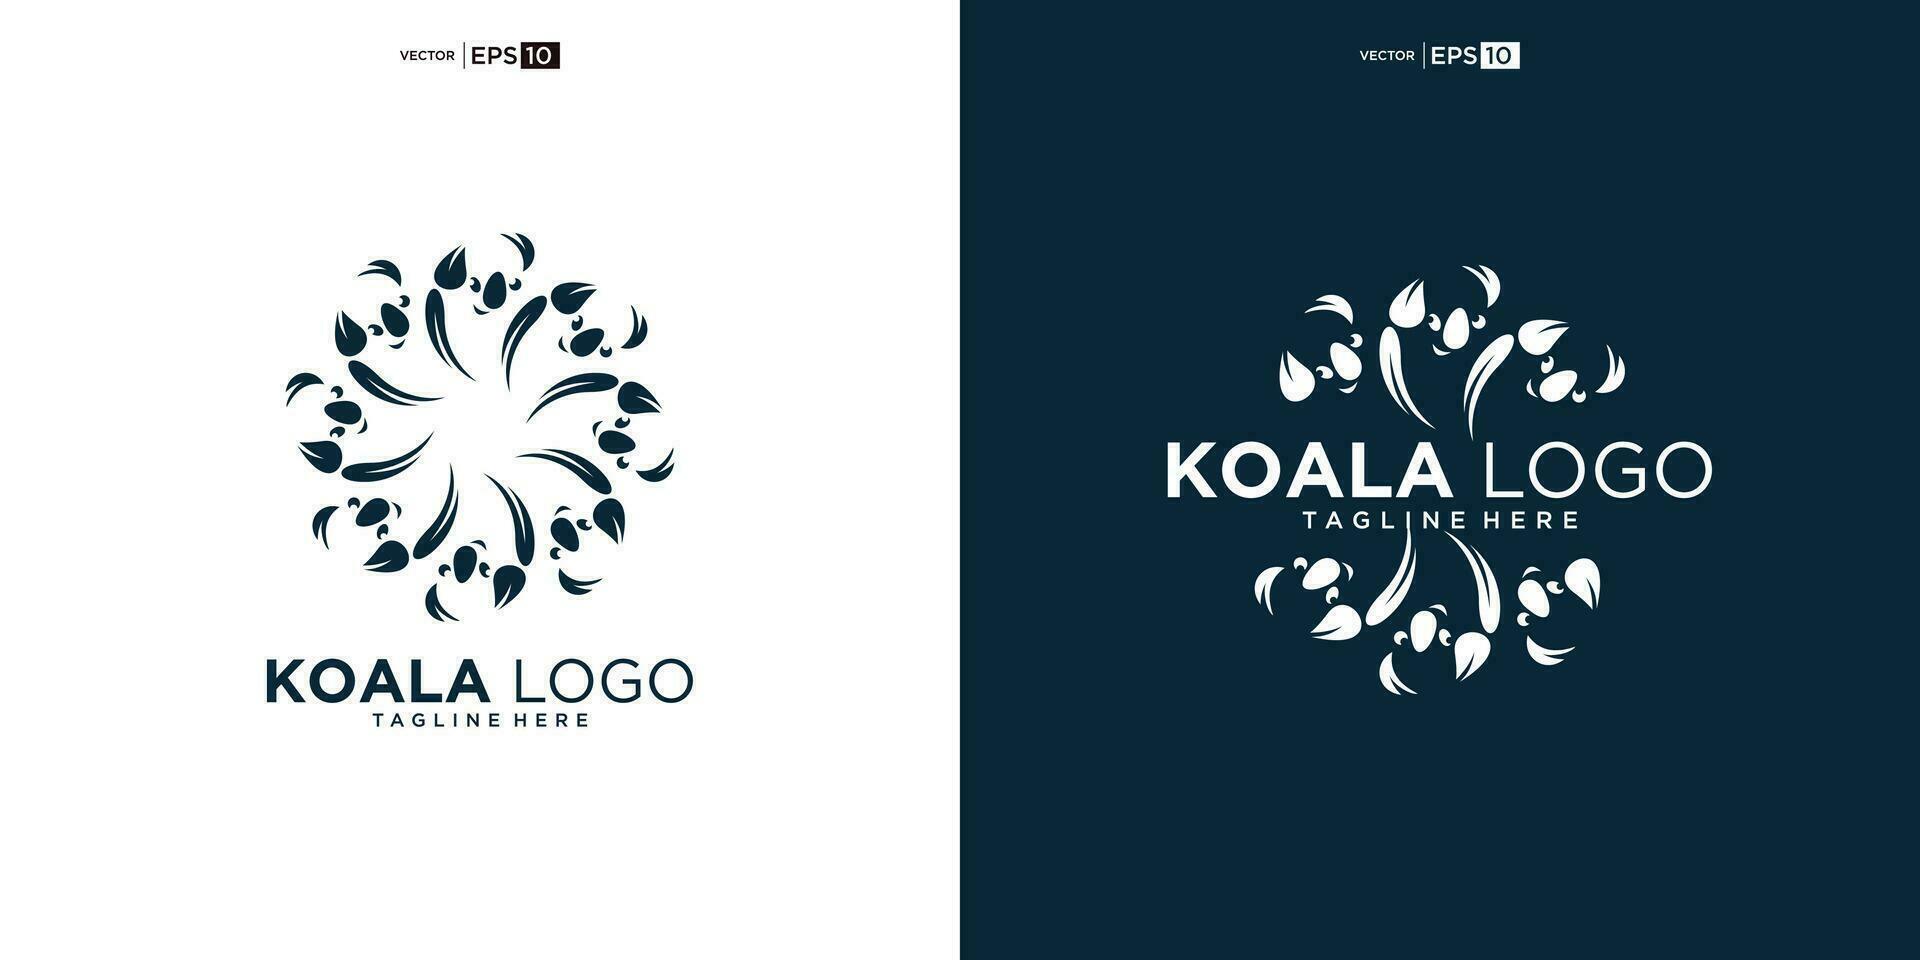 koala logo design inspiration vector